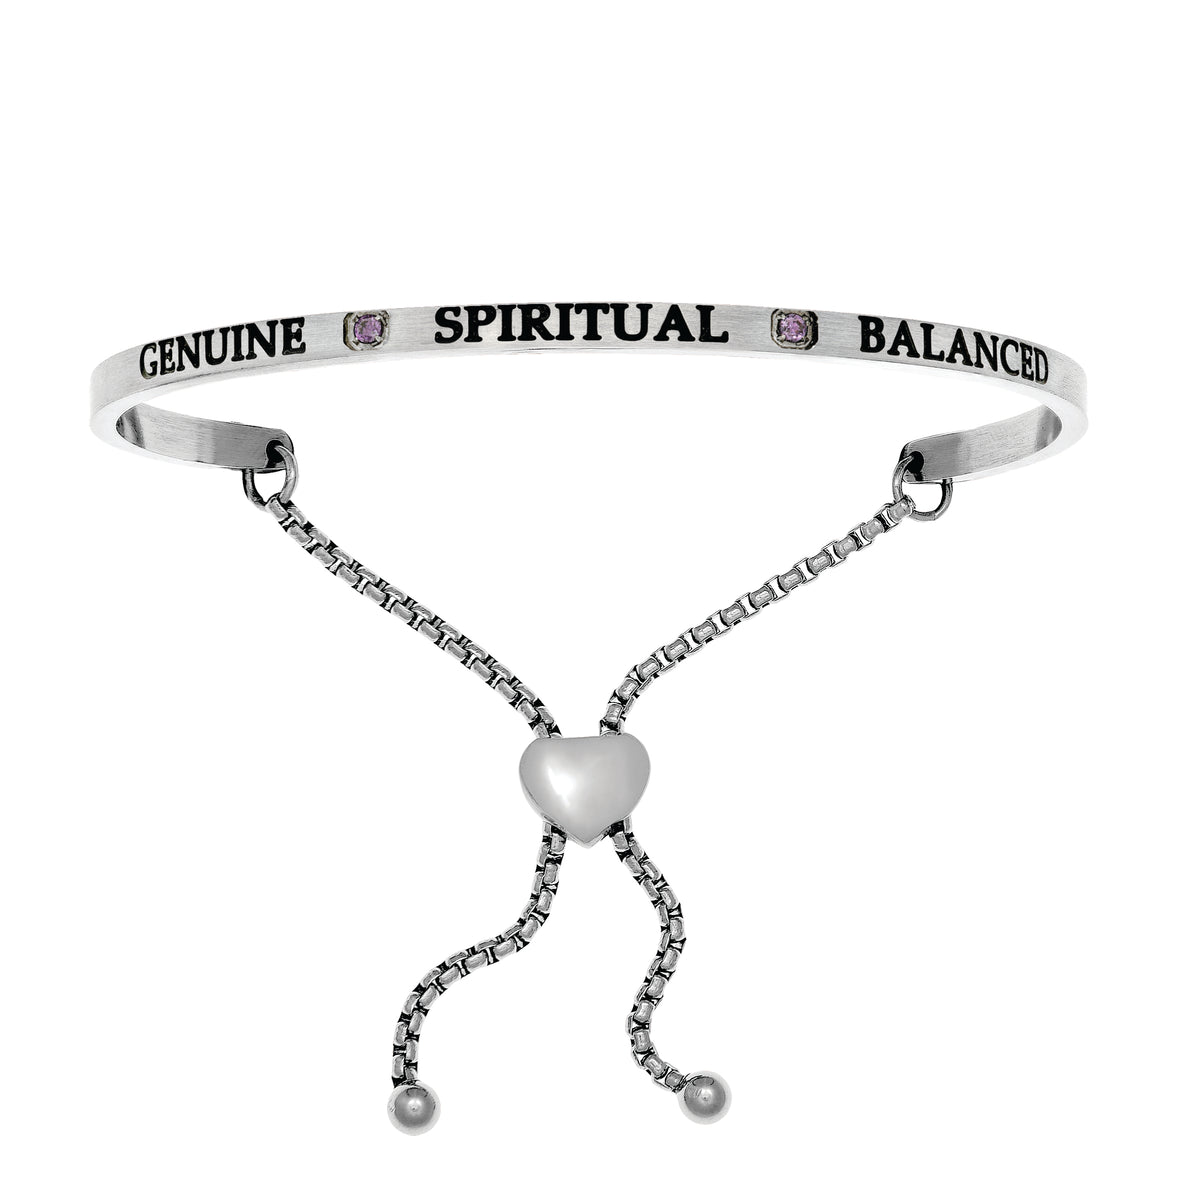 Intuitions Stainless Steel Genuine, Spiritual, Balanced February Purple Birthstone Bangle Bracelet fine designer jewelry for men and women